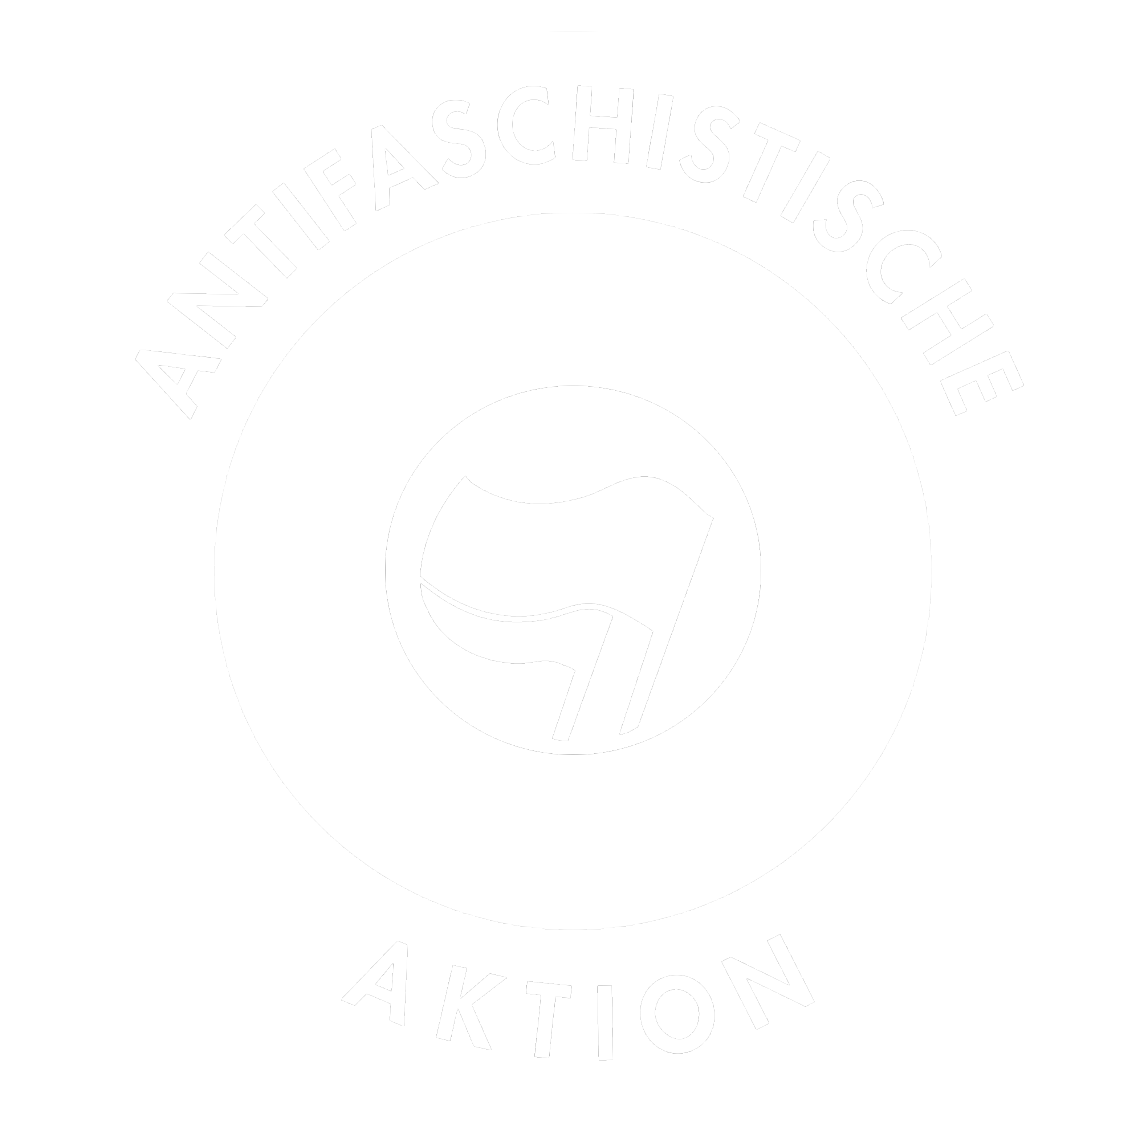 target logo with antifa flag and name